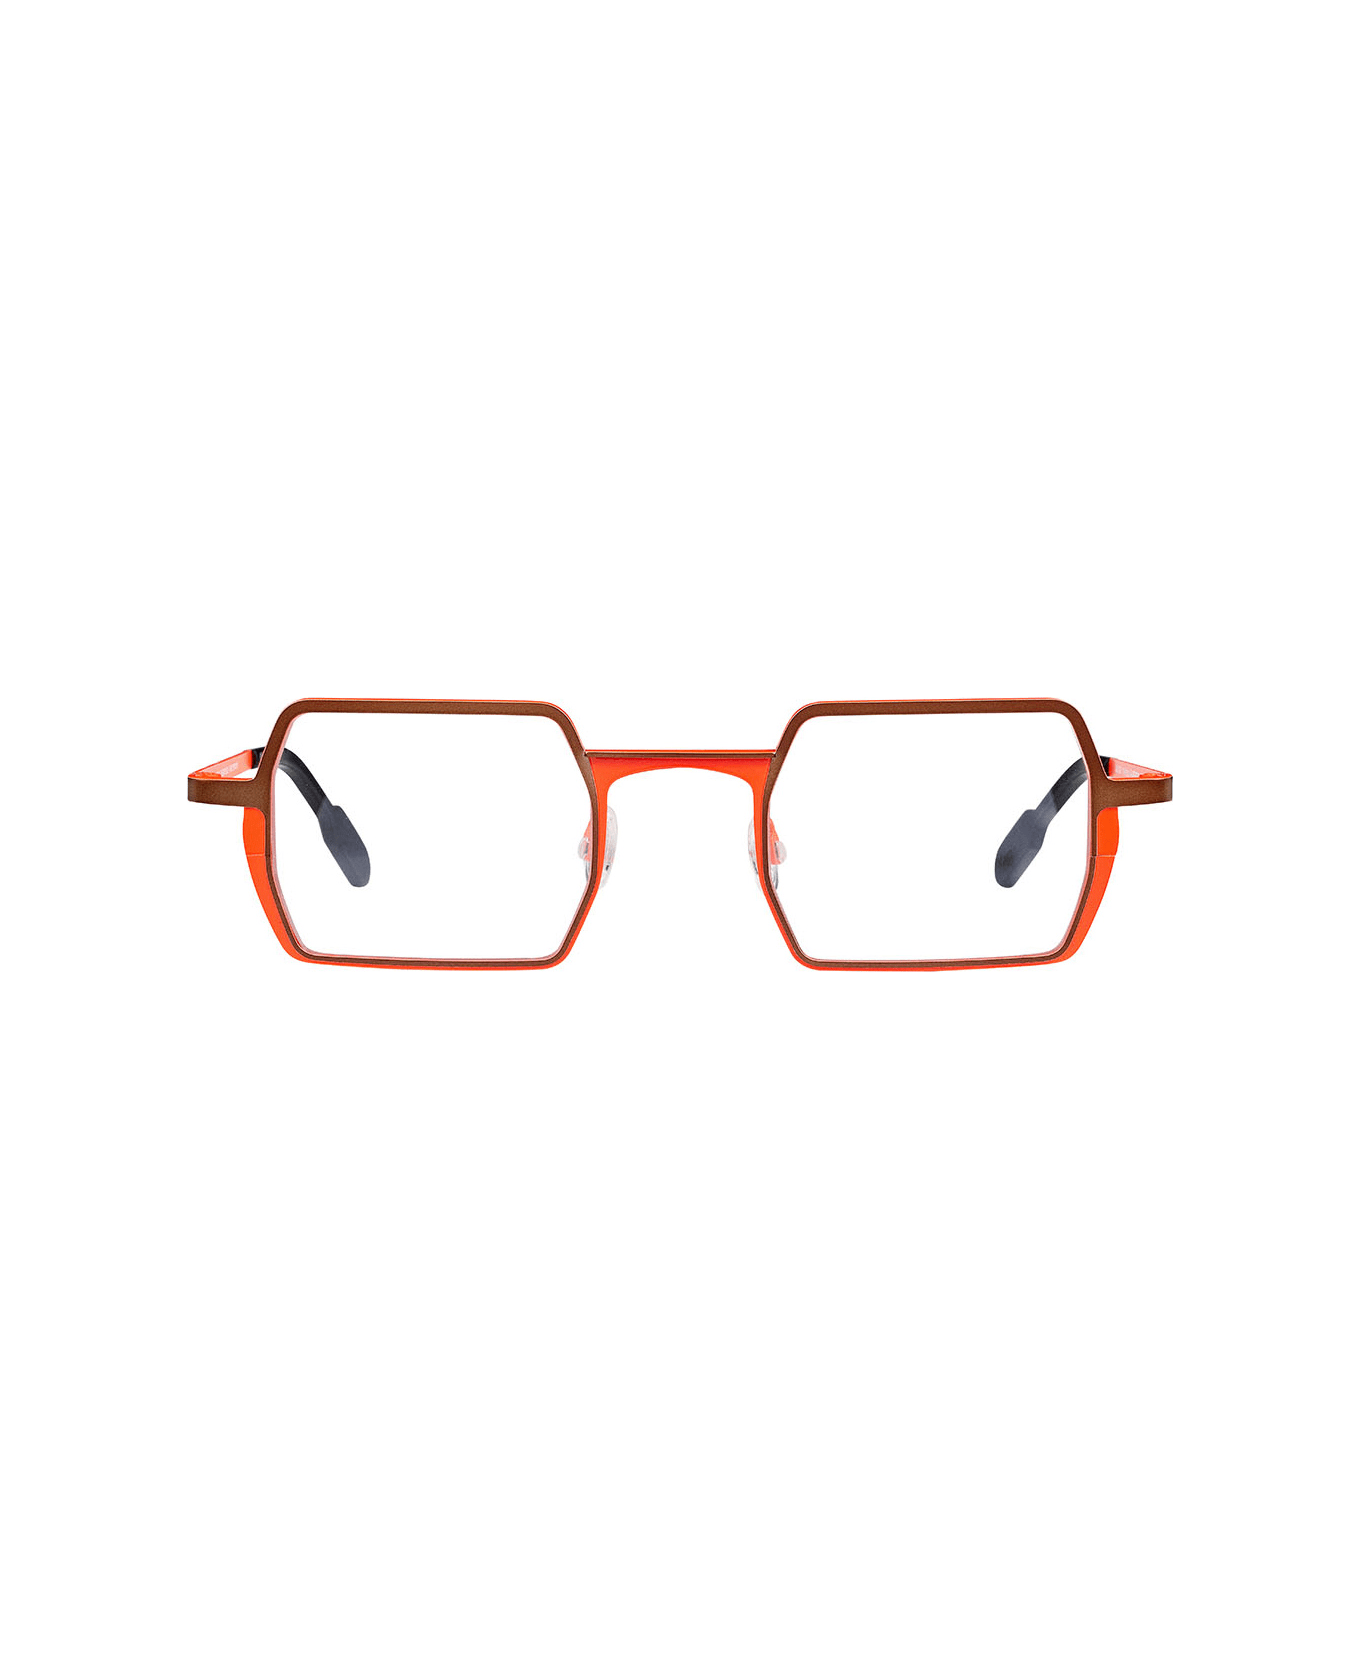 Matttew Ristretto Glasses - Arancione アイウェア